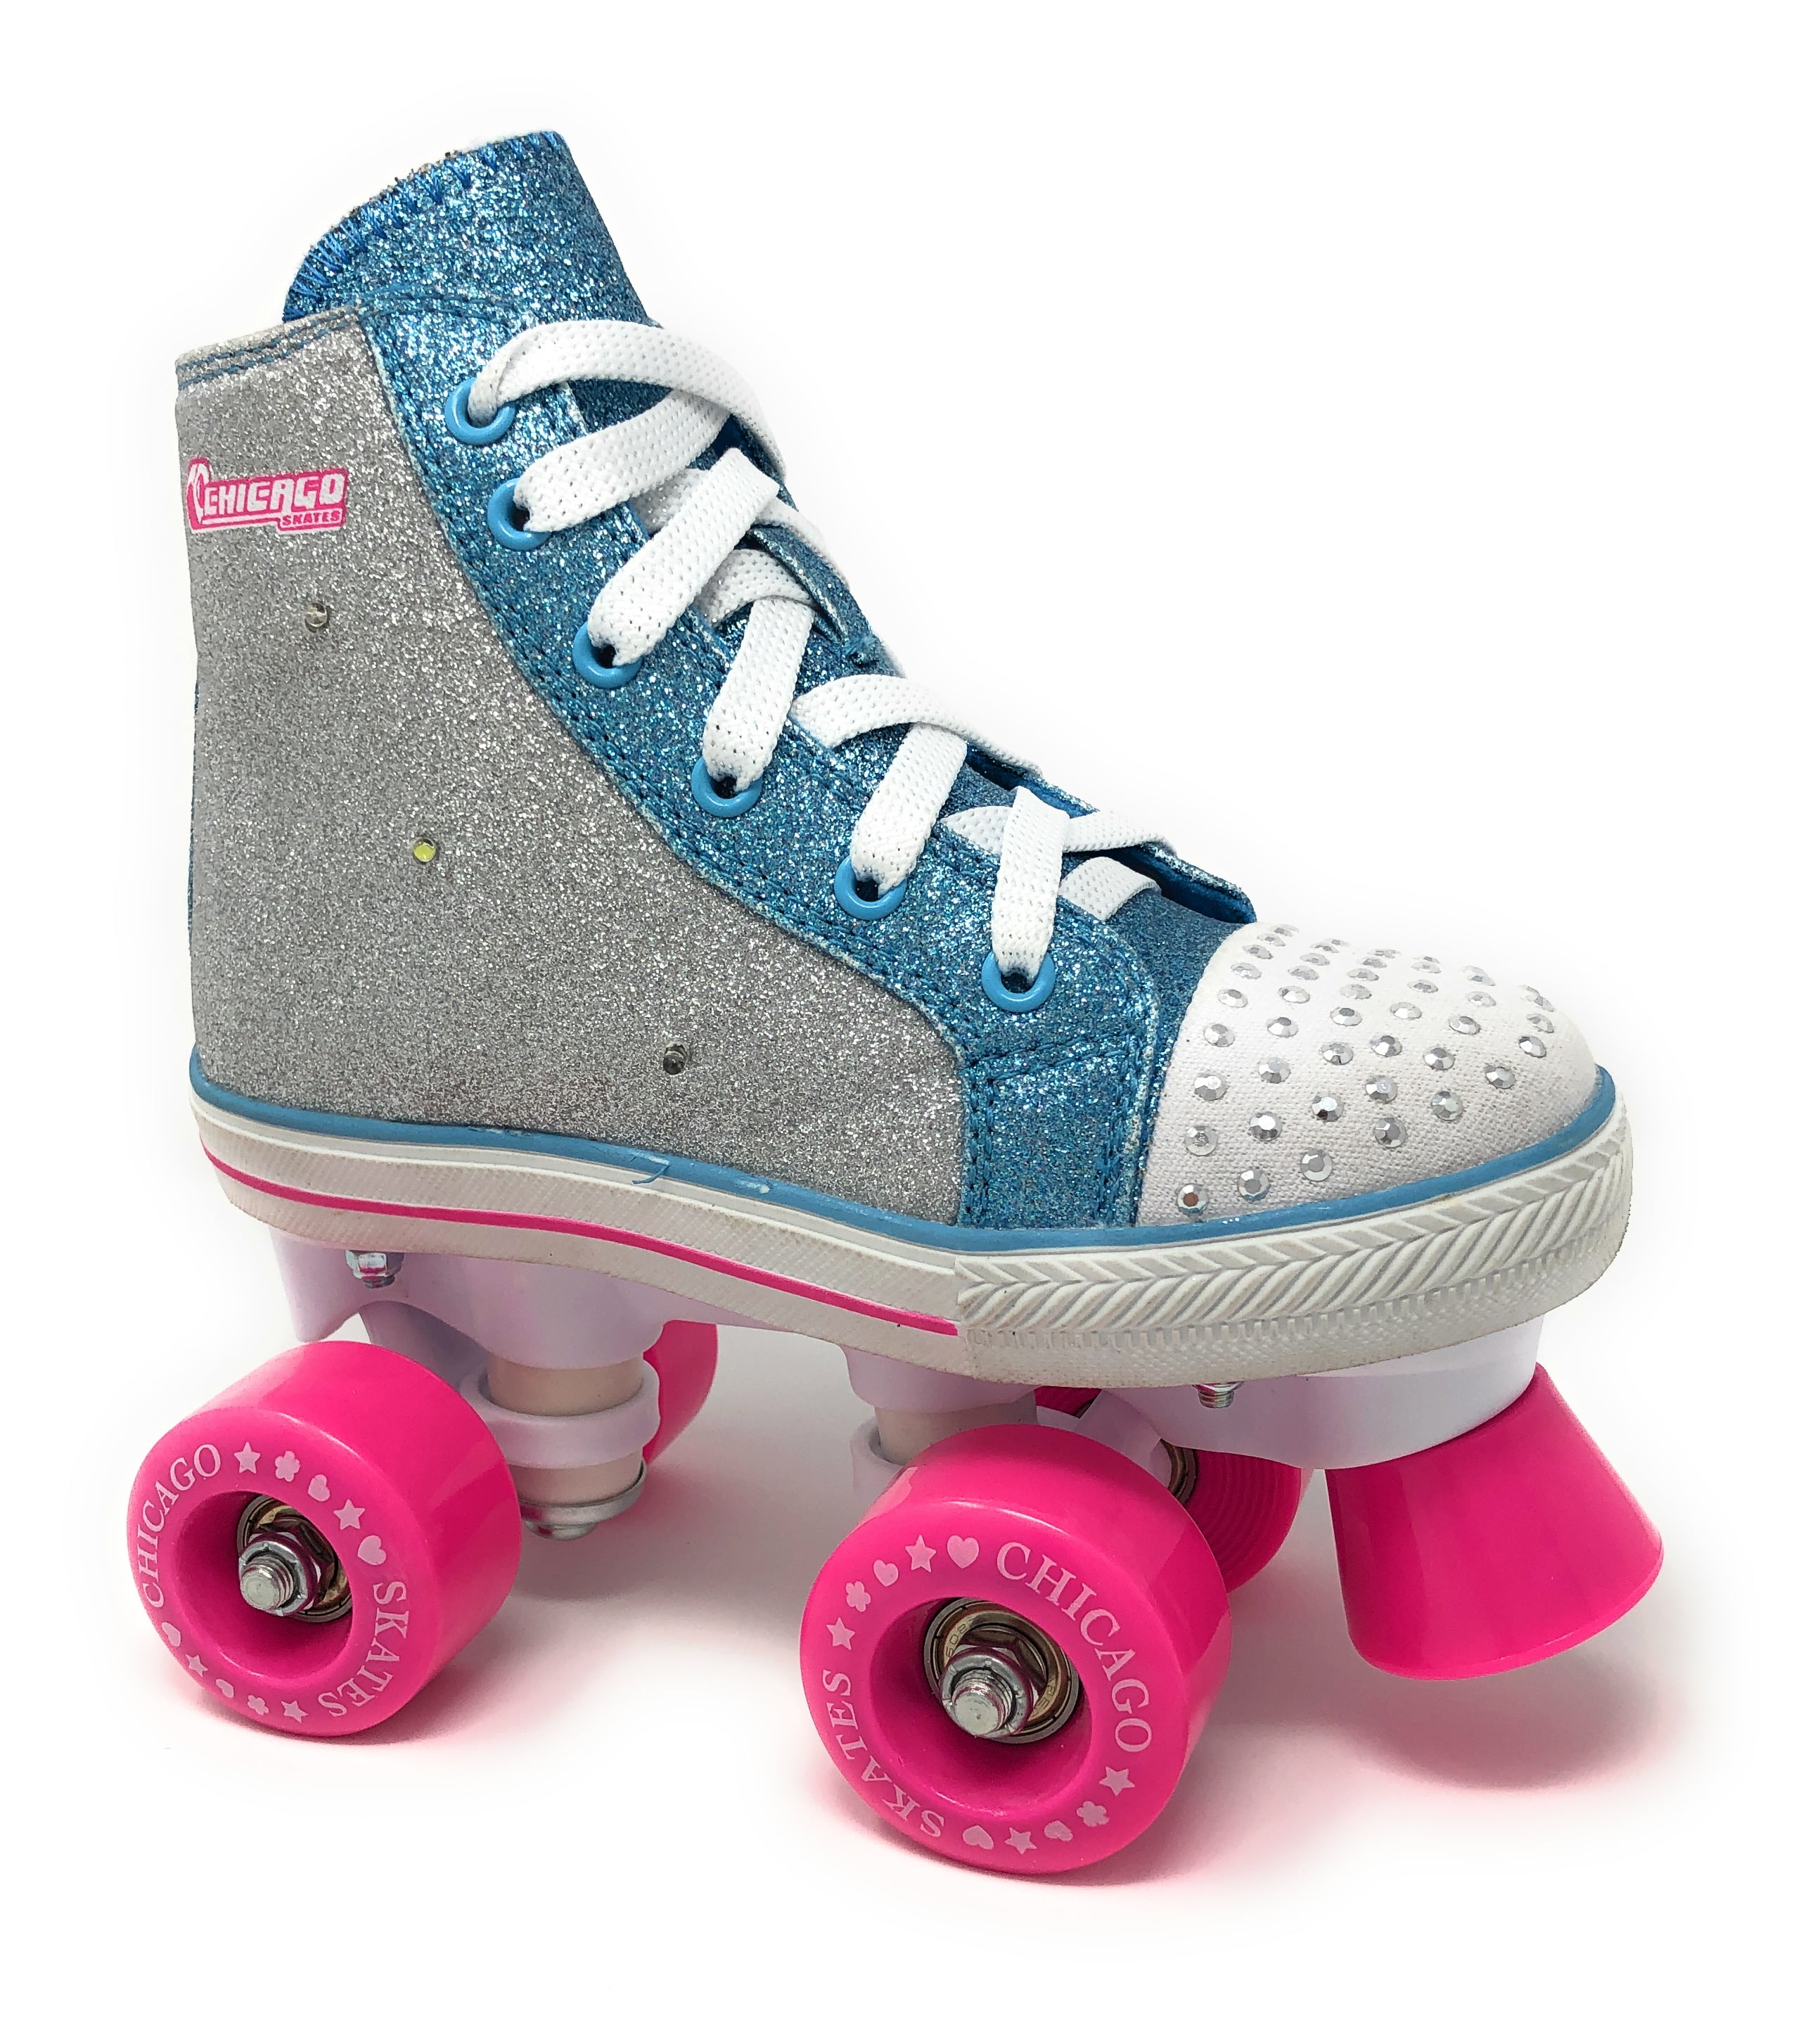 Size 1 Chicago Skates Girls Fashion Quad Skates with Flashing Lights Glitter Silver/Teal/Pink 